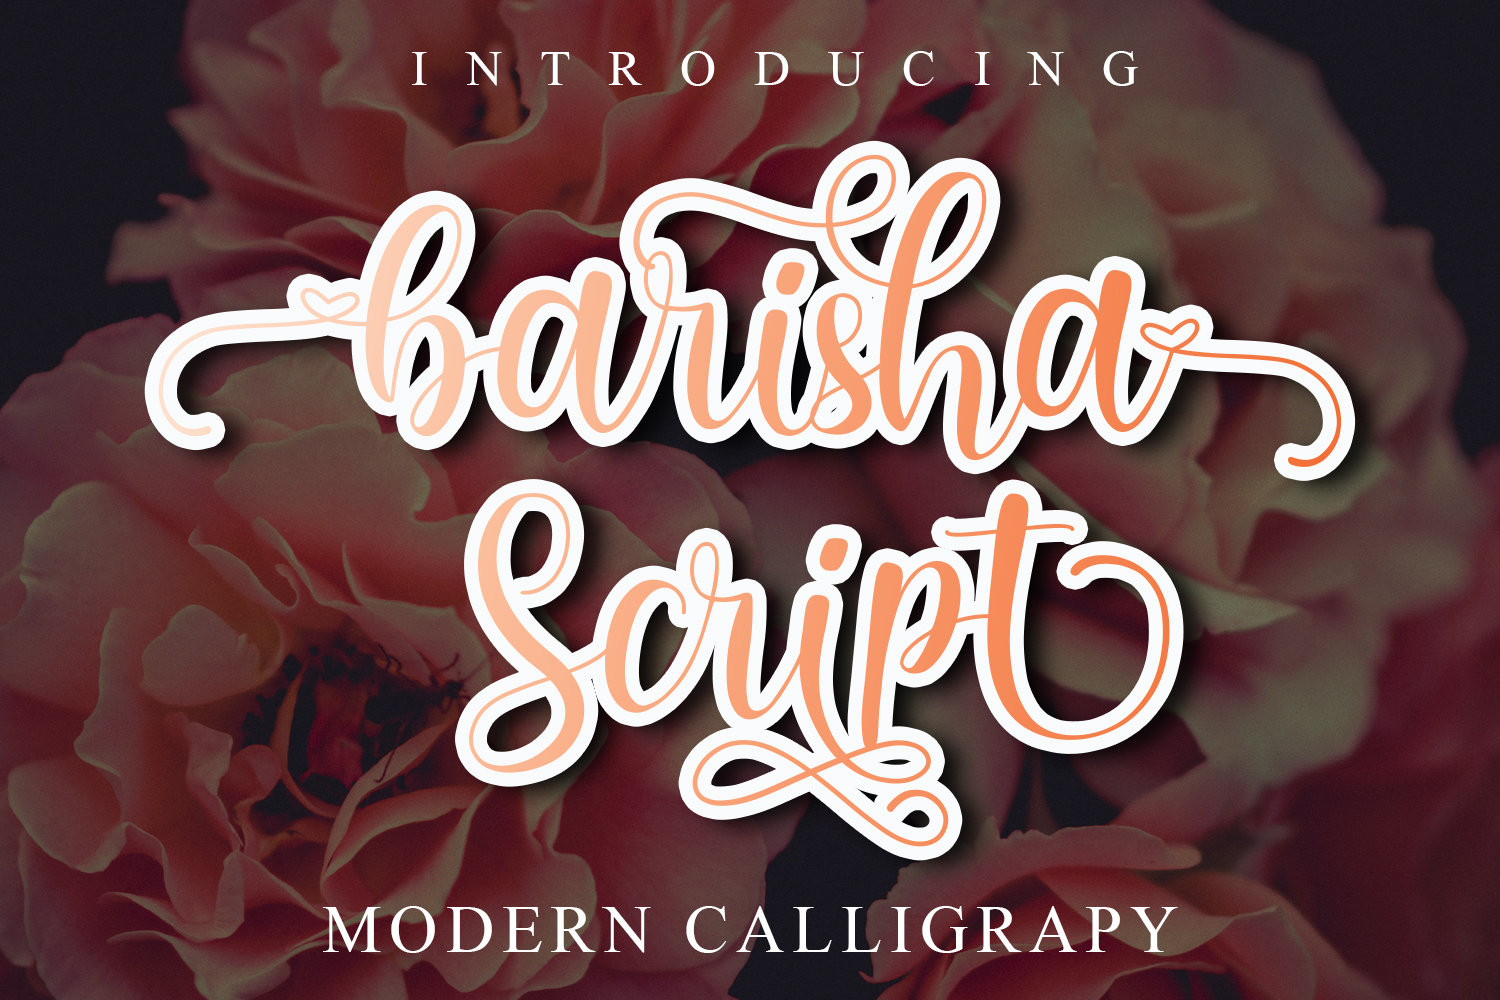 barisha script - Personal Use